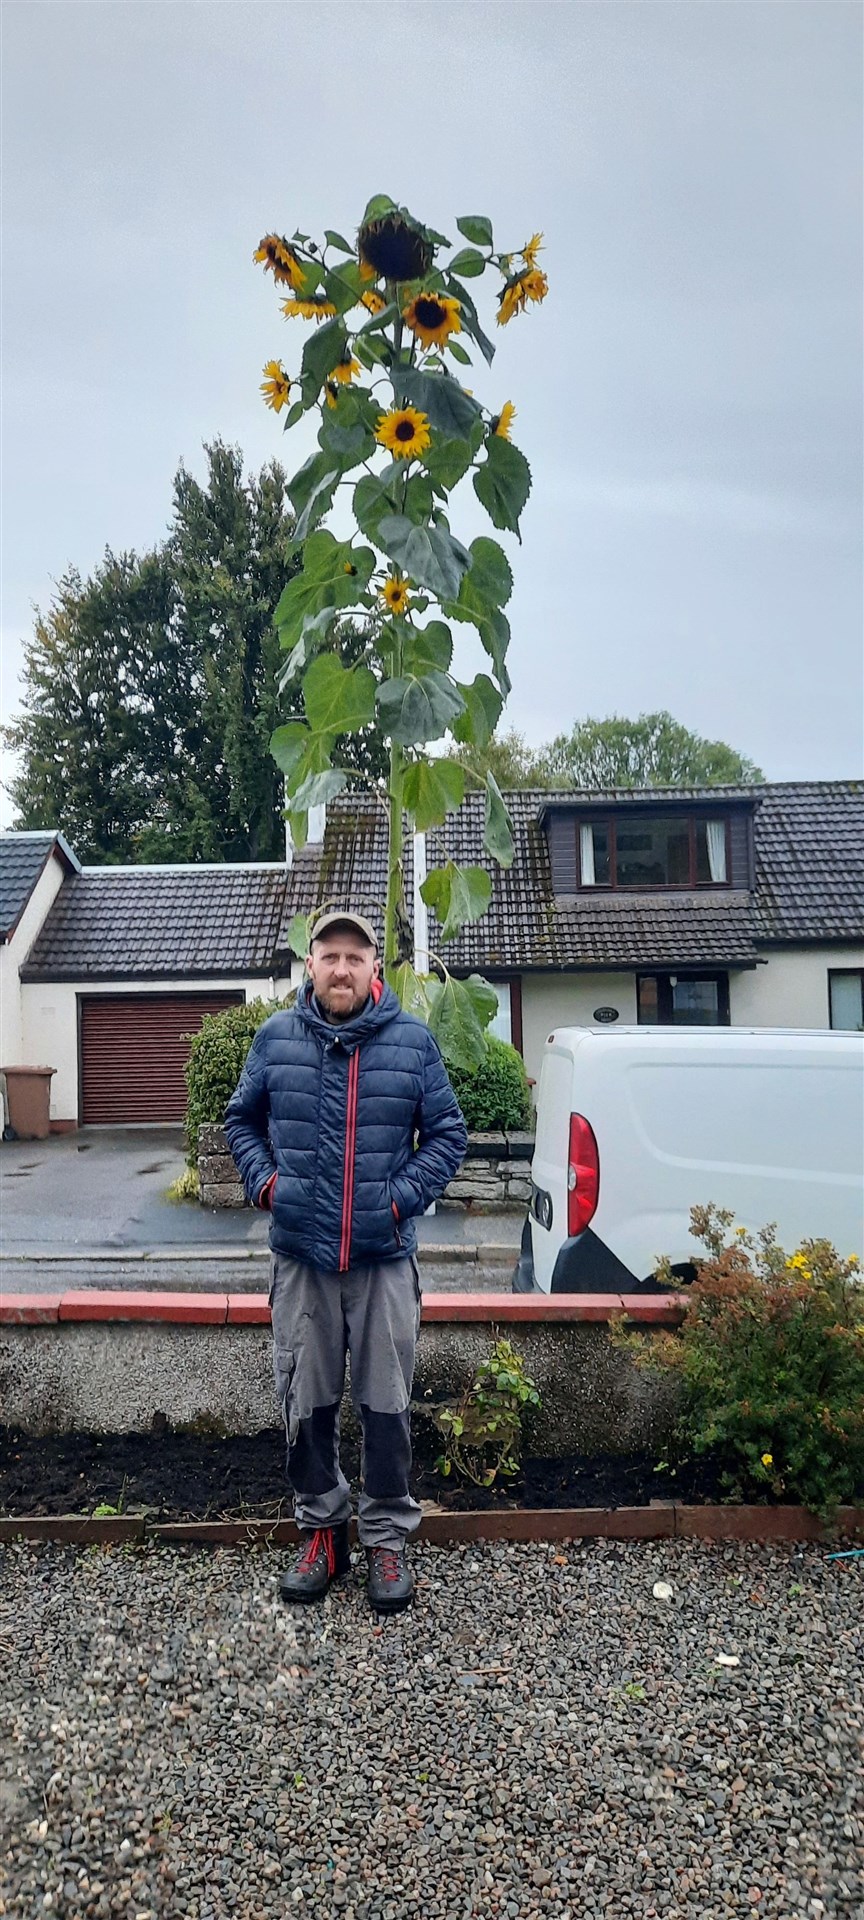 Martin Maclennan with his flourishing sunflower.